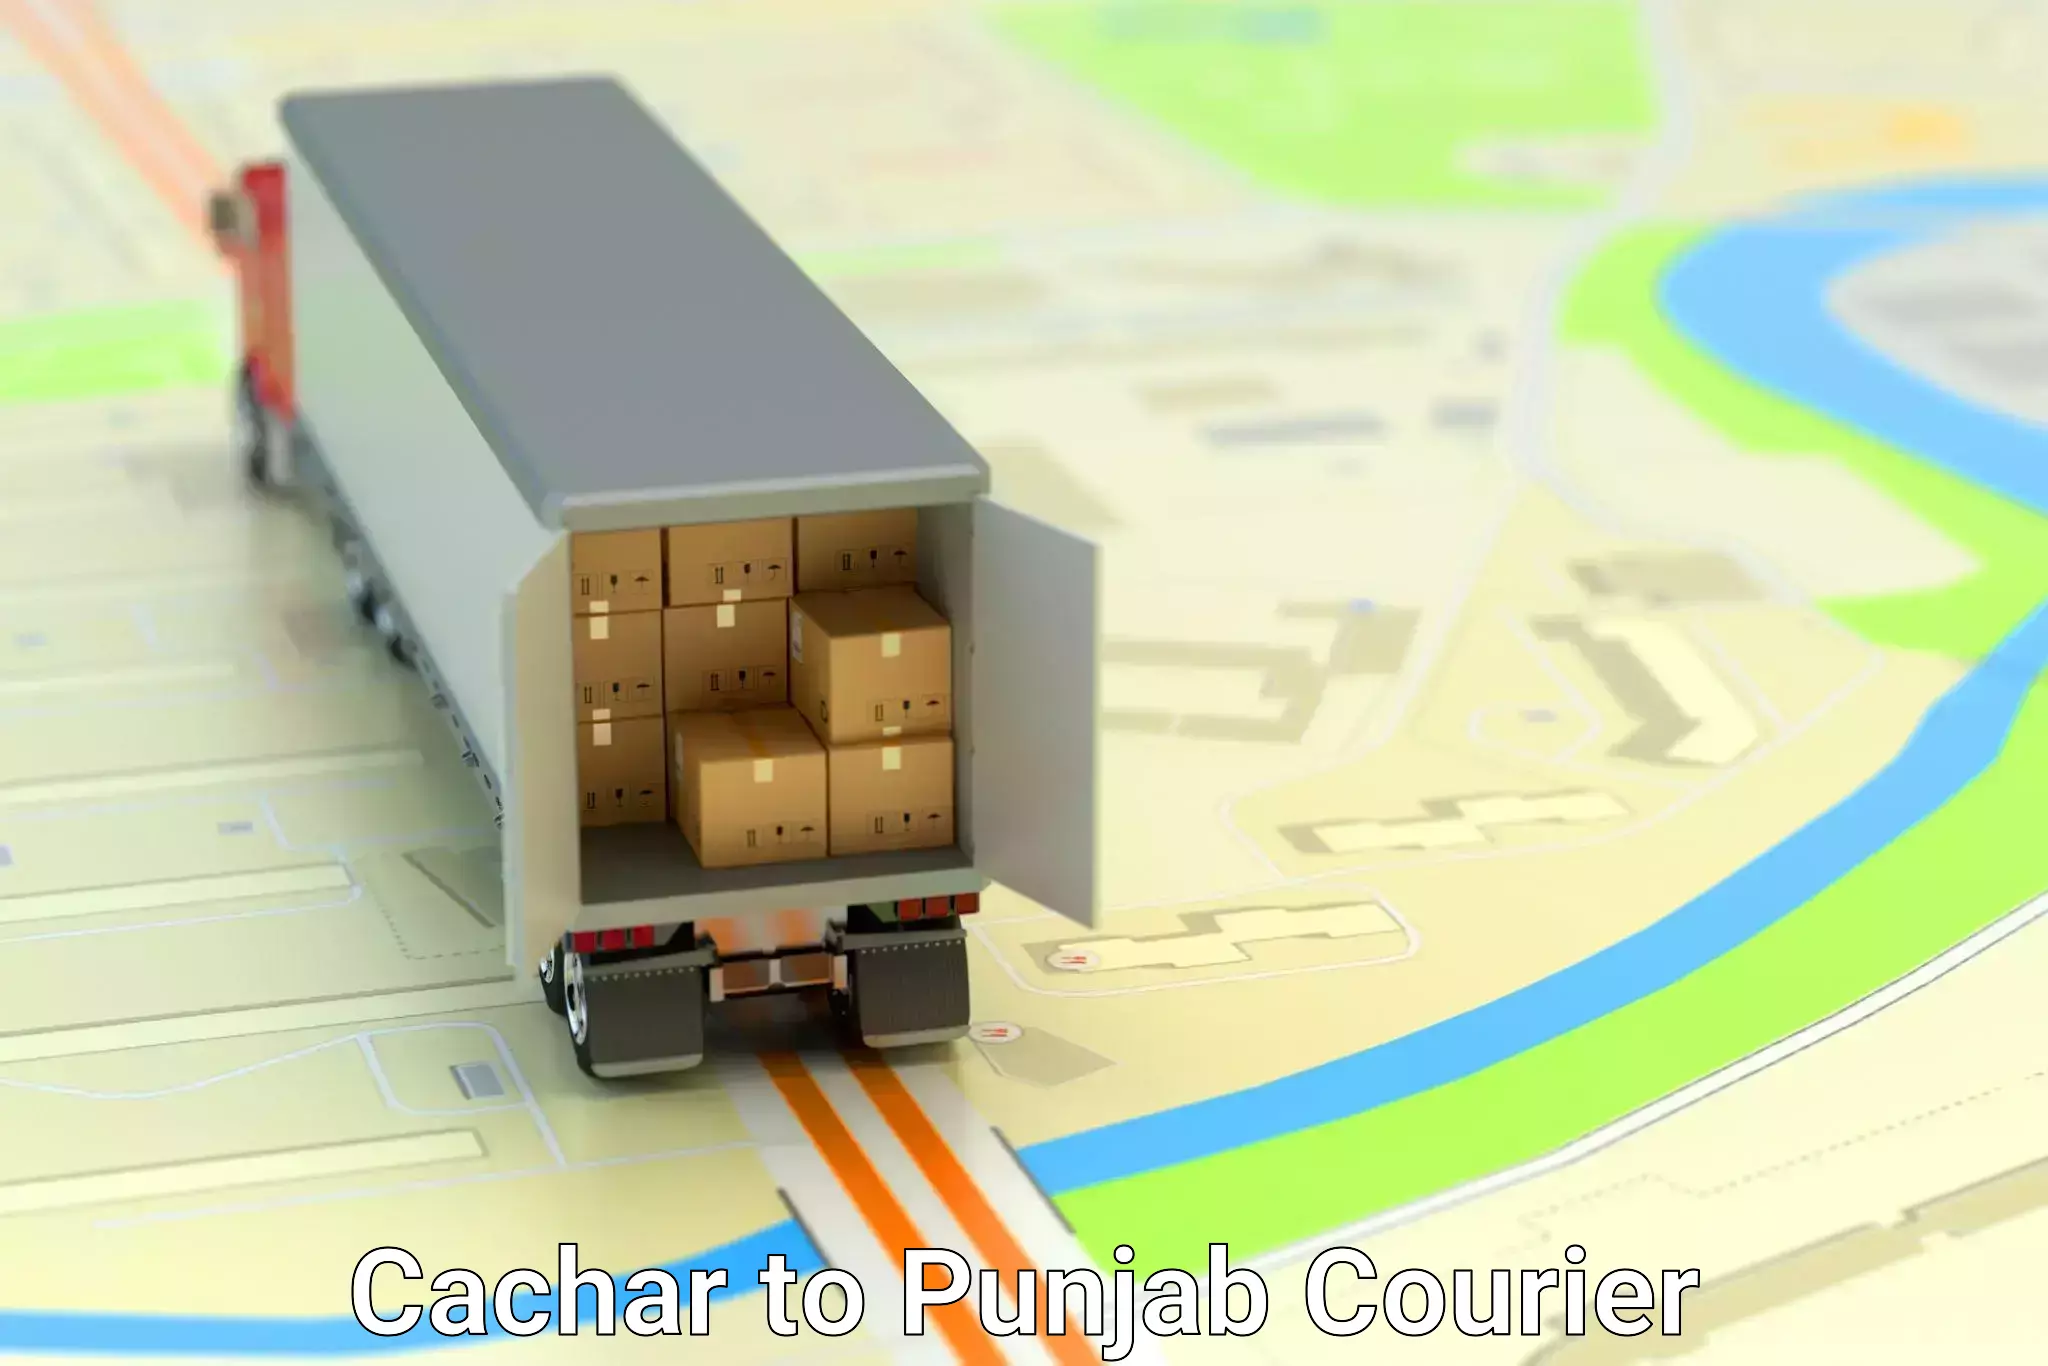 Logistics solutions Cachar to Goindwal Sahib